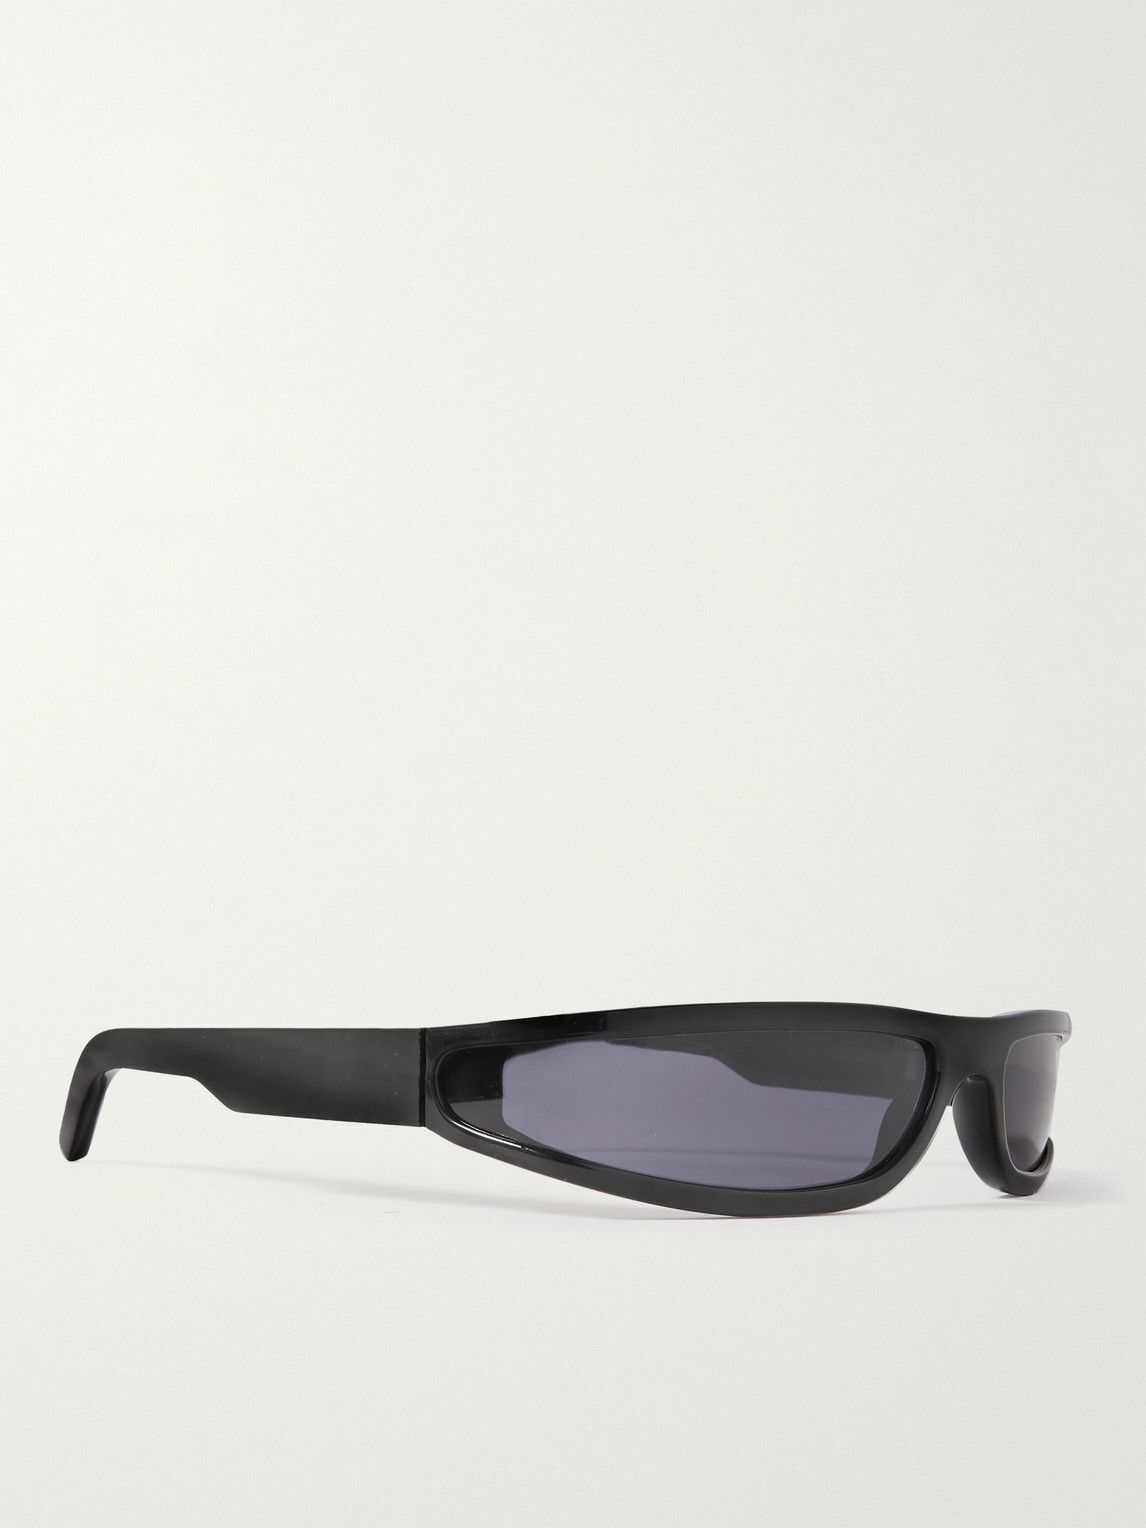 Rick Owens - Square-Frame Grilamid Sunglasses